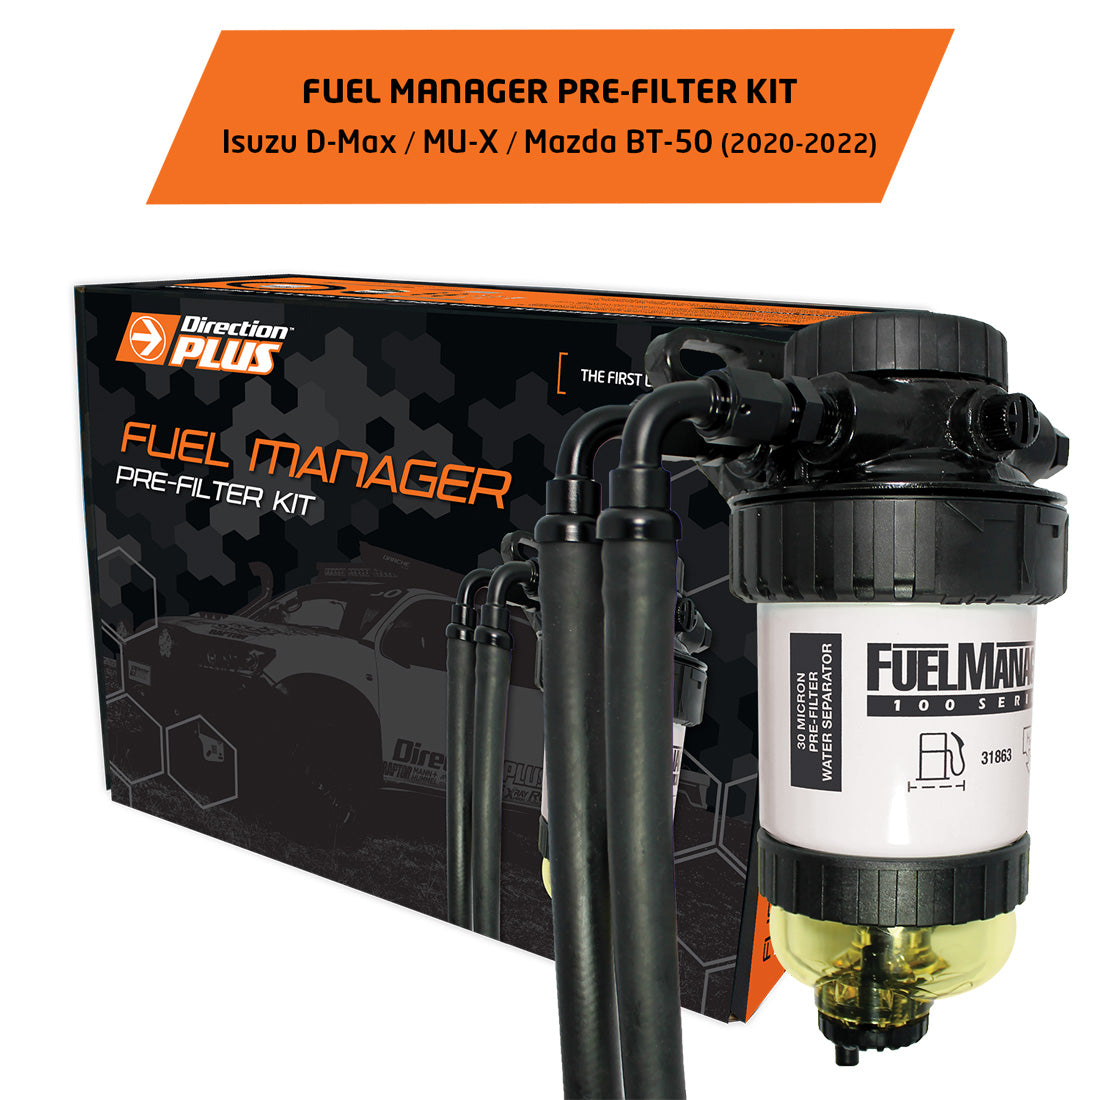 Direction Plus Fuel Manager Prefilter Kit Isuzu D-MAX / MU-X  Mazda BT-50 (FM645DPK)